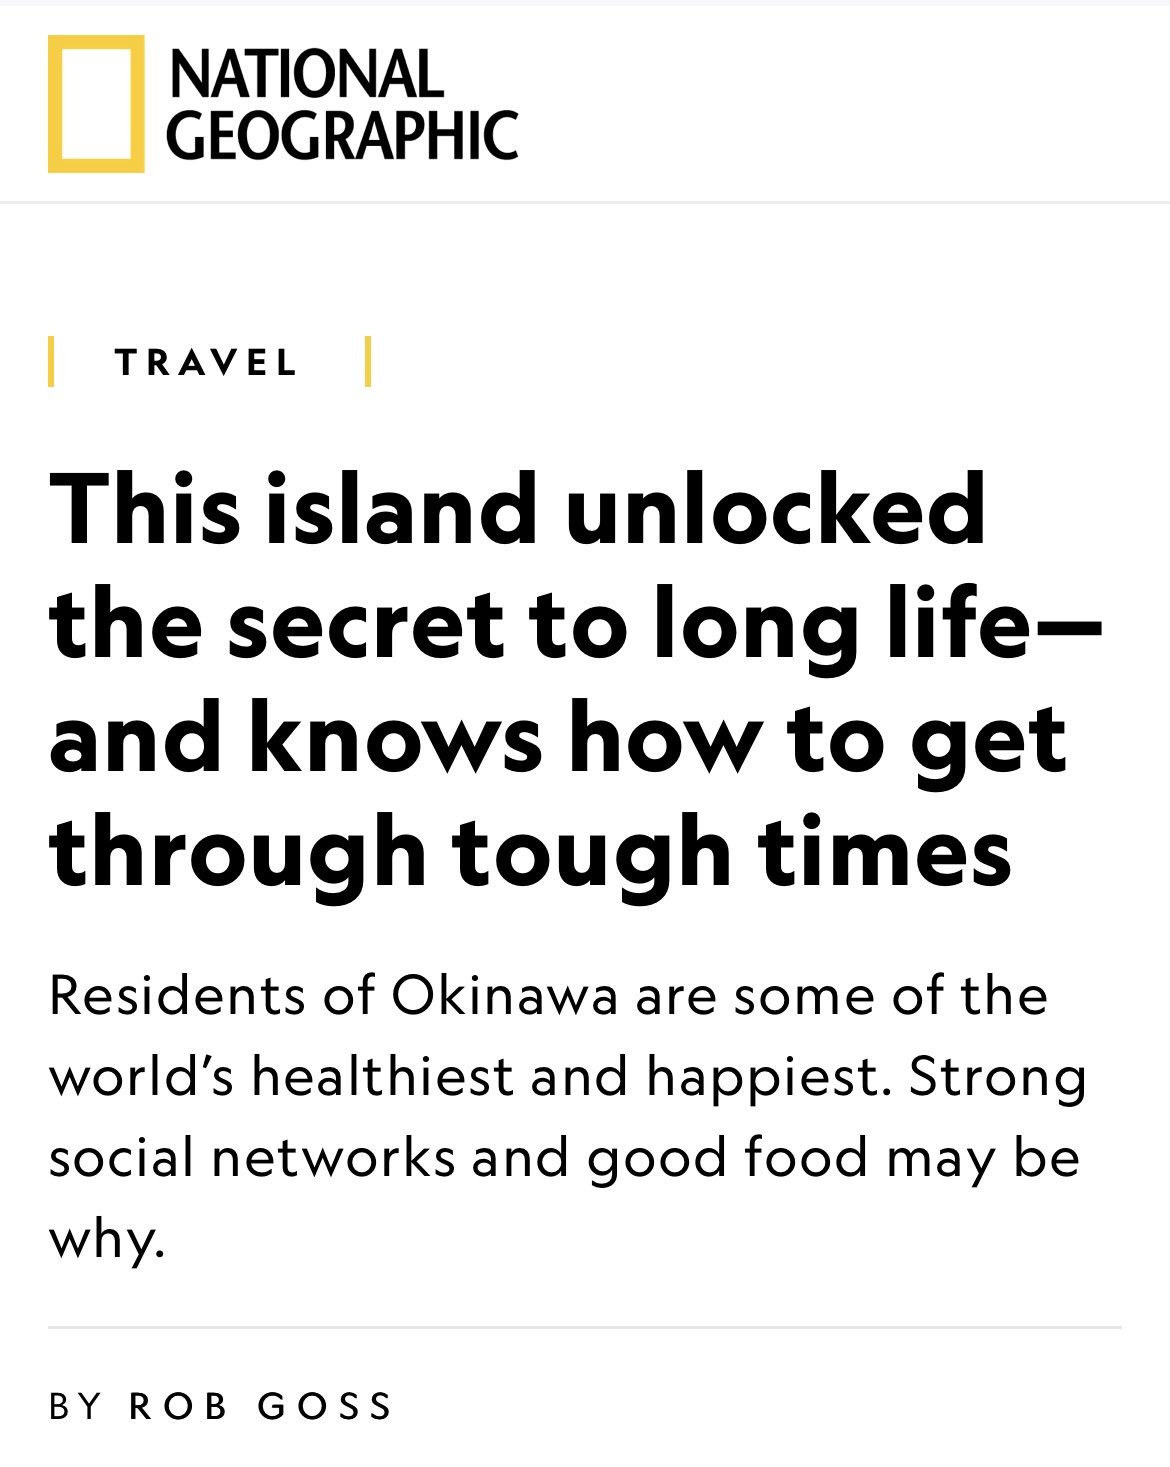 This island unlocked the secret to long life - Nationalgeographic.com (2020)